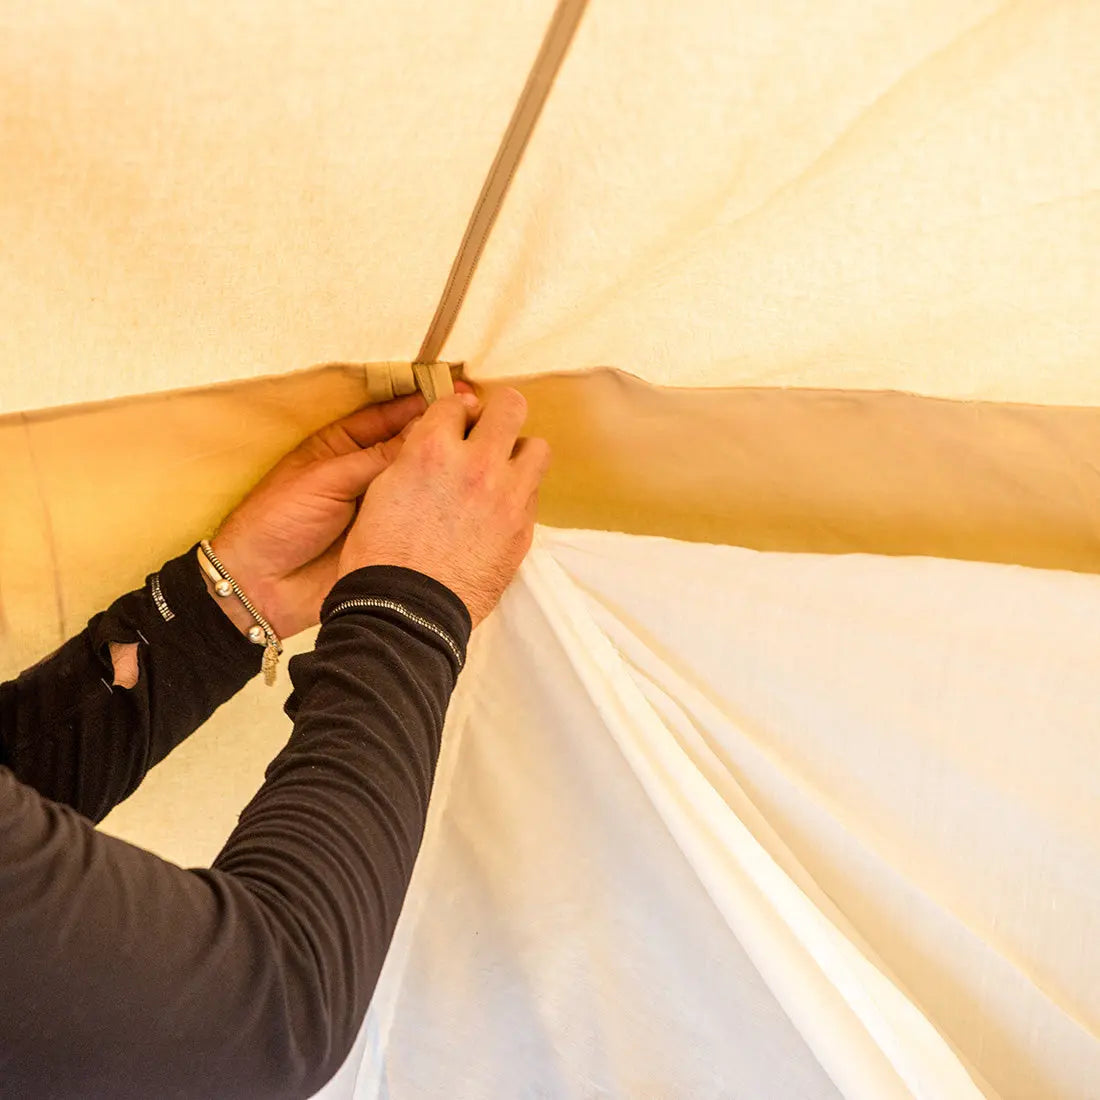 Inner Tent (All Designs)  Boutique Camping dark light blackout